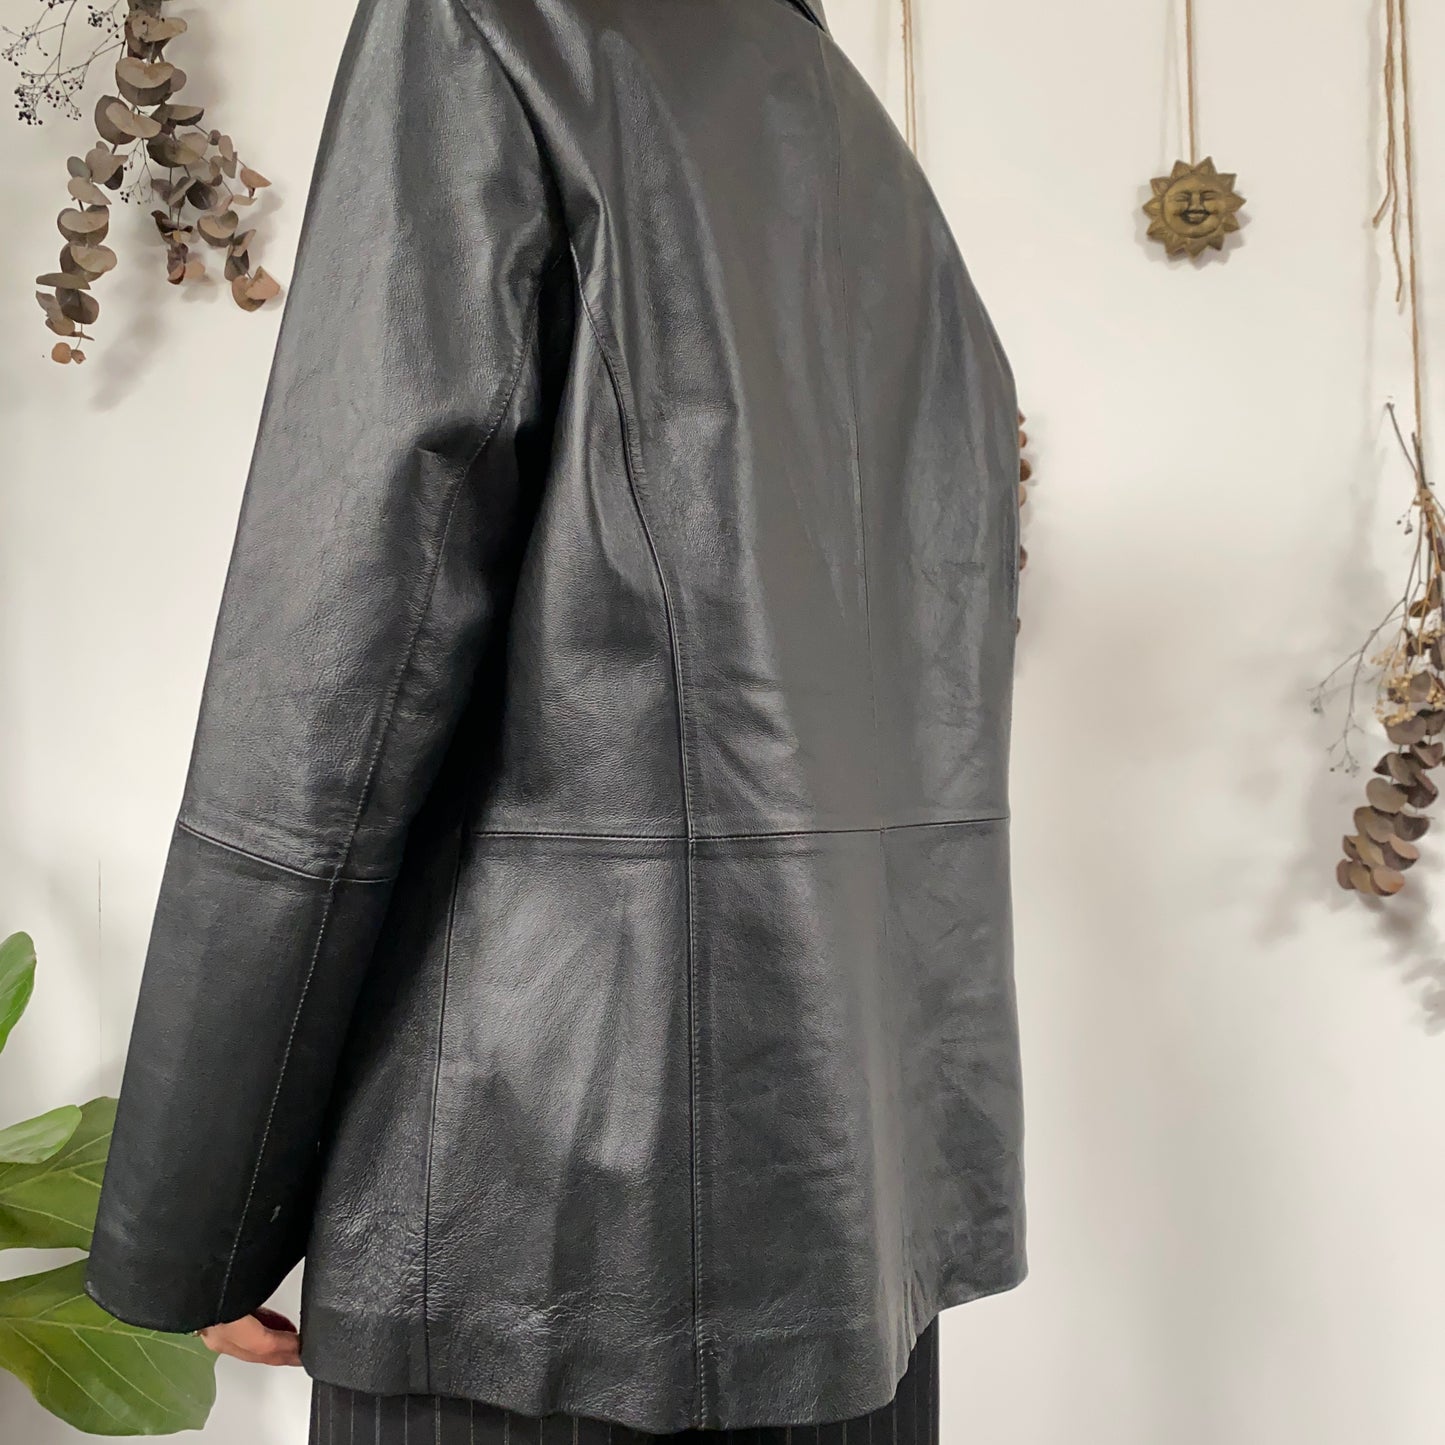 Black leather jacket - size L